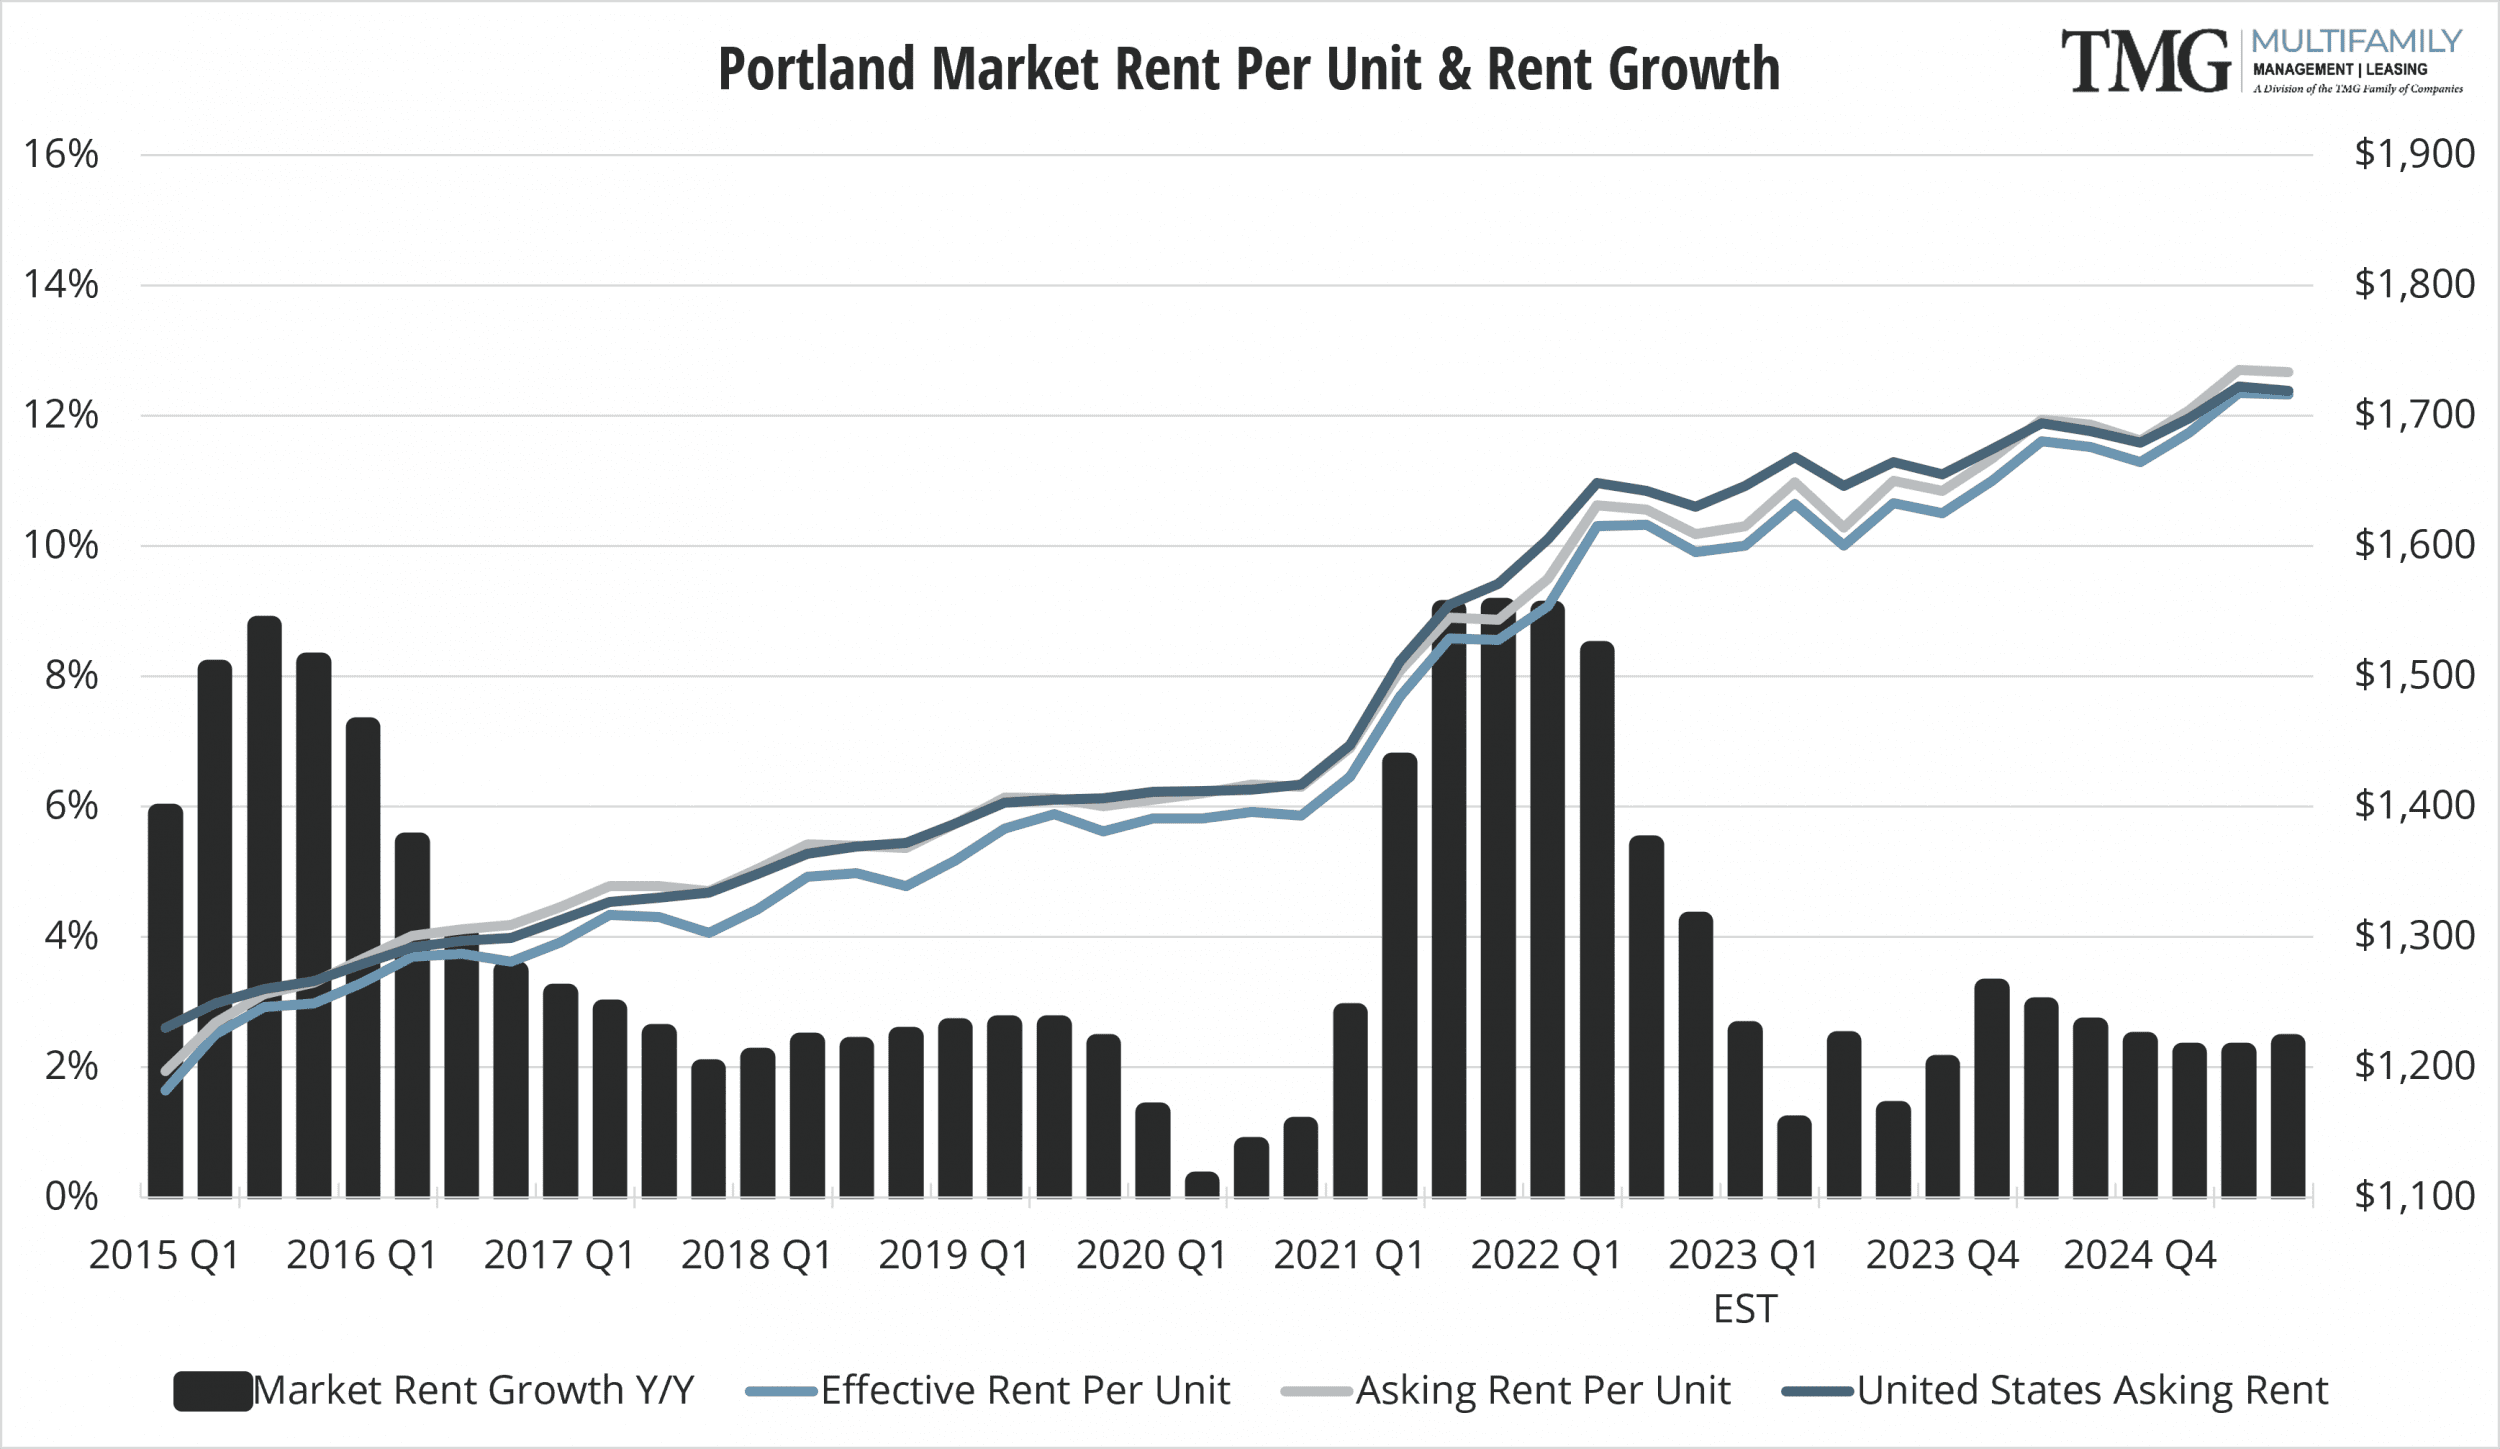 PDX Market Rent Per Unit & Rent Growth